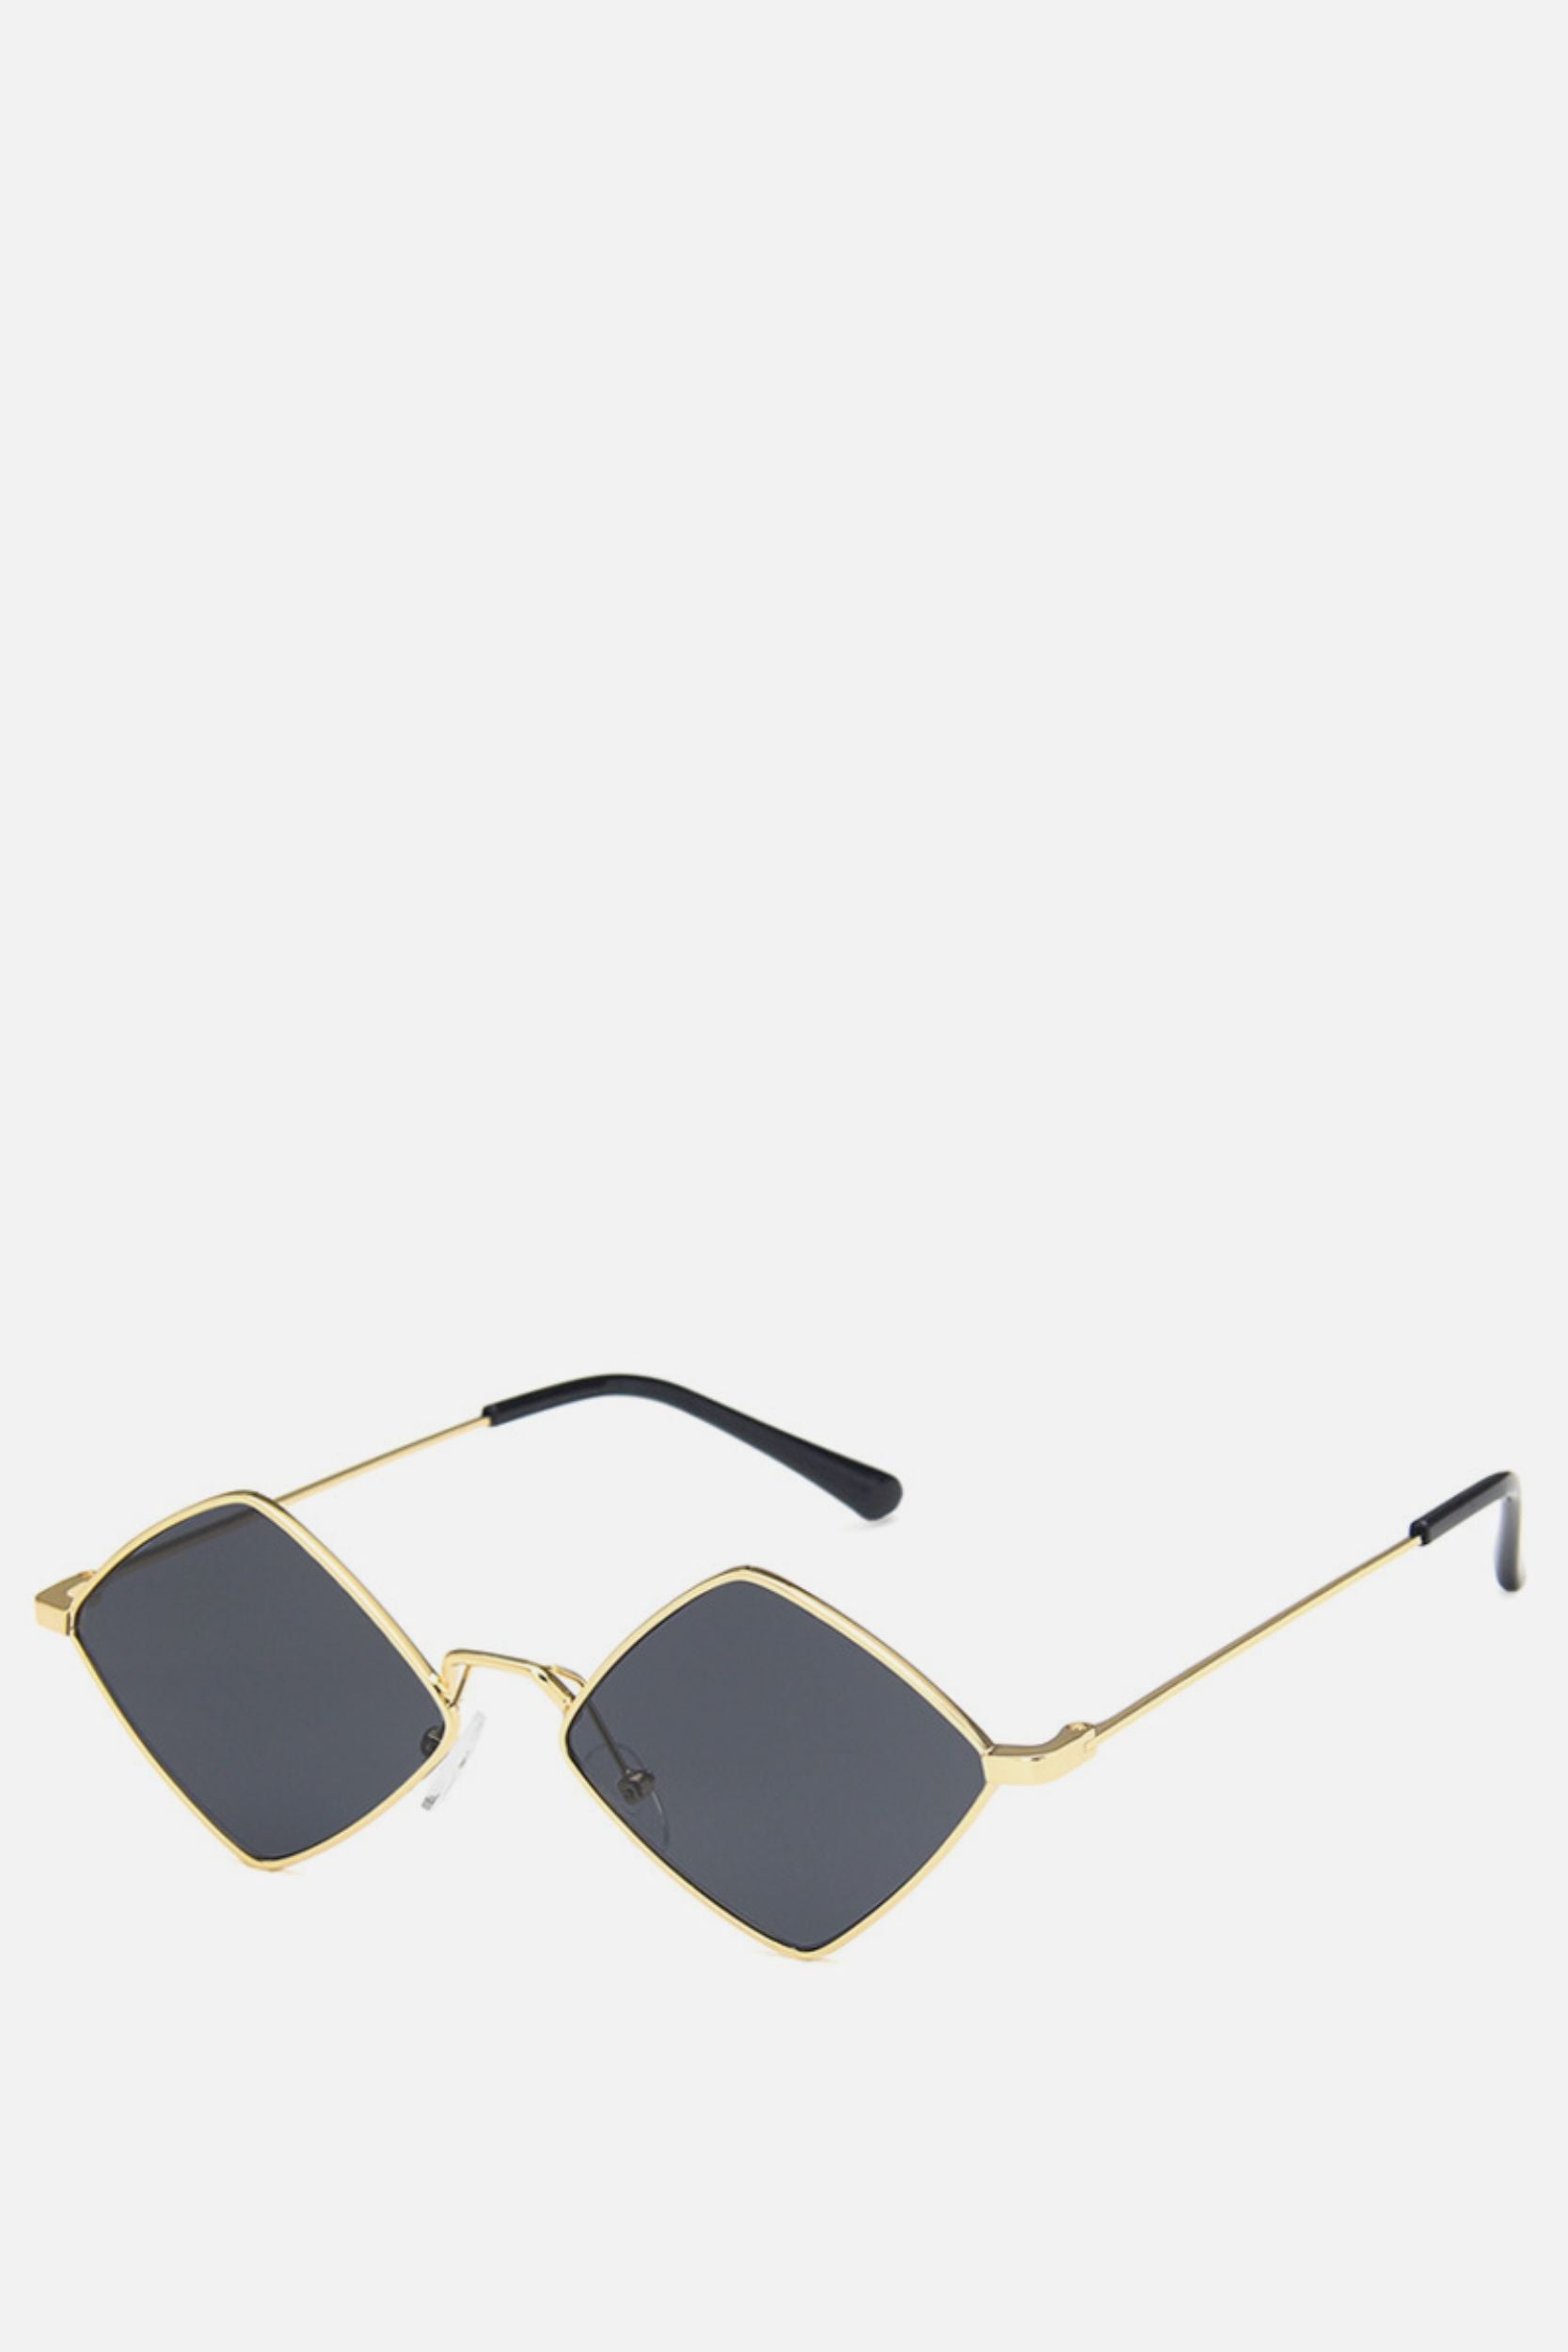 TEXAS Black Hexagon Sunglasses